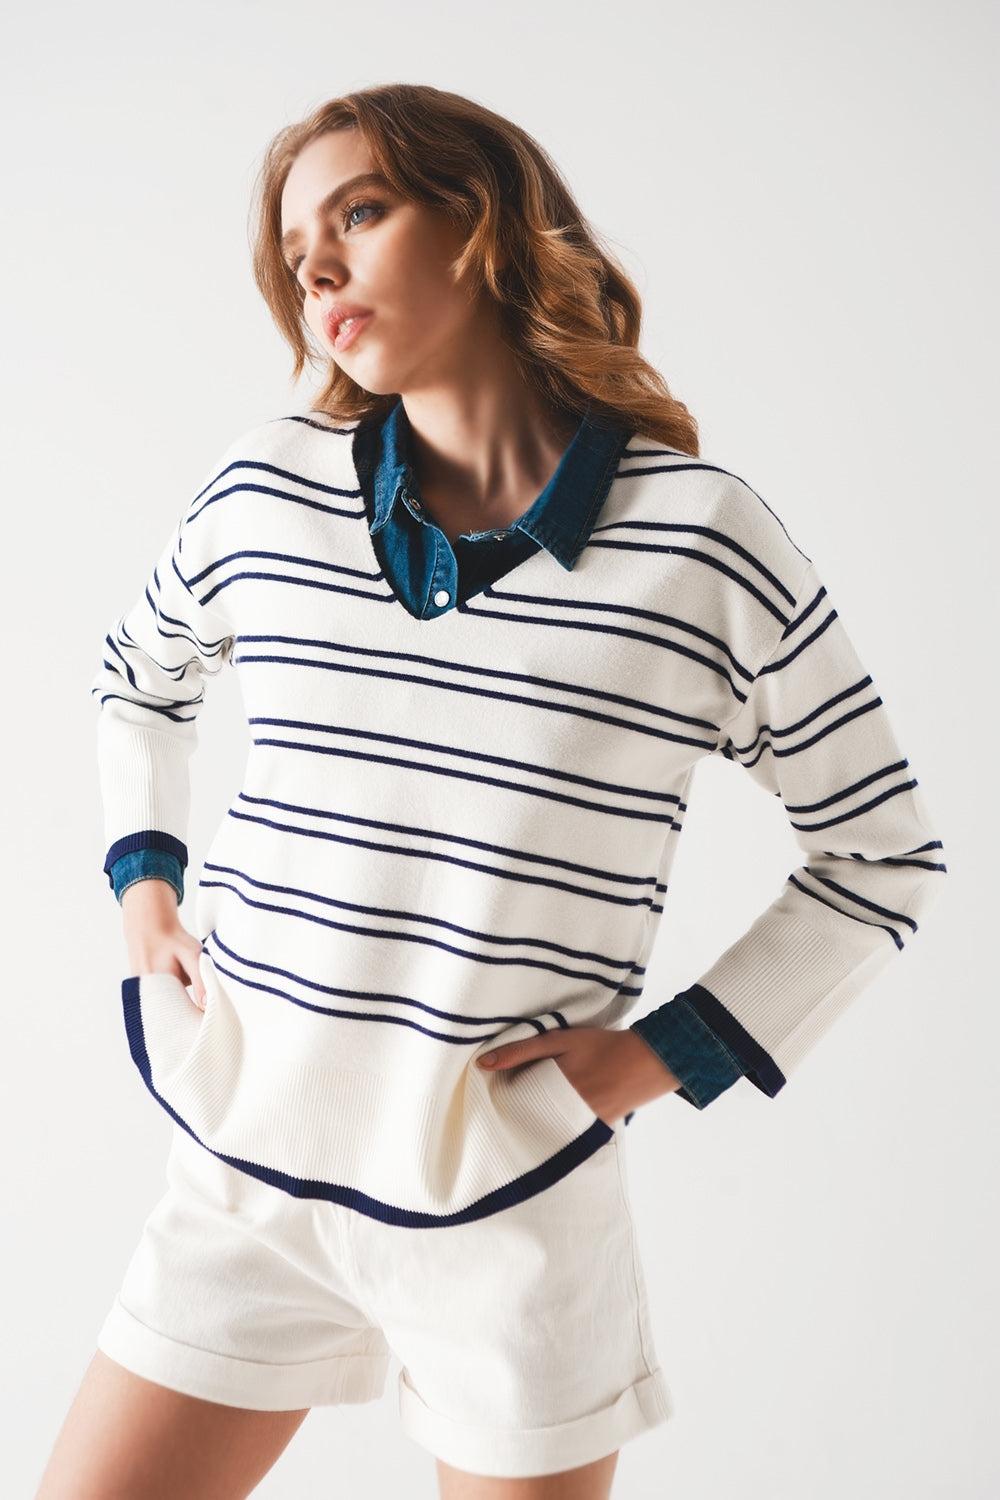 Sweater in white with navy stripe Szua Store